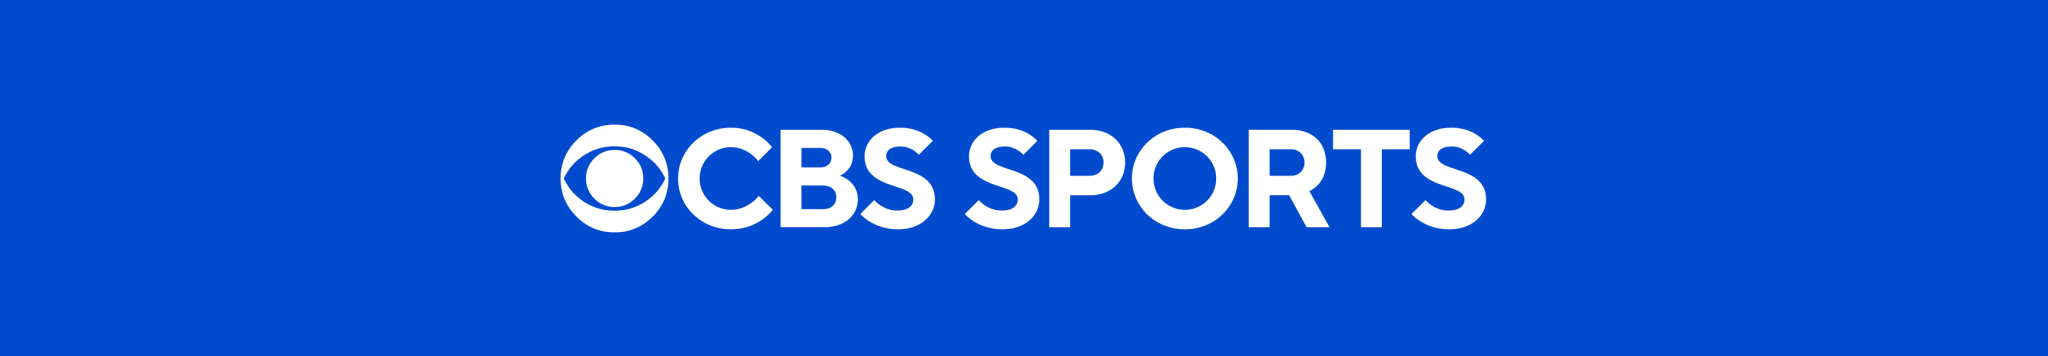 CBS Sports Couvertures